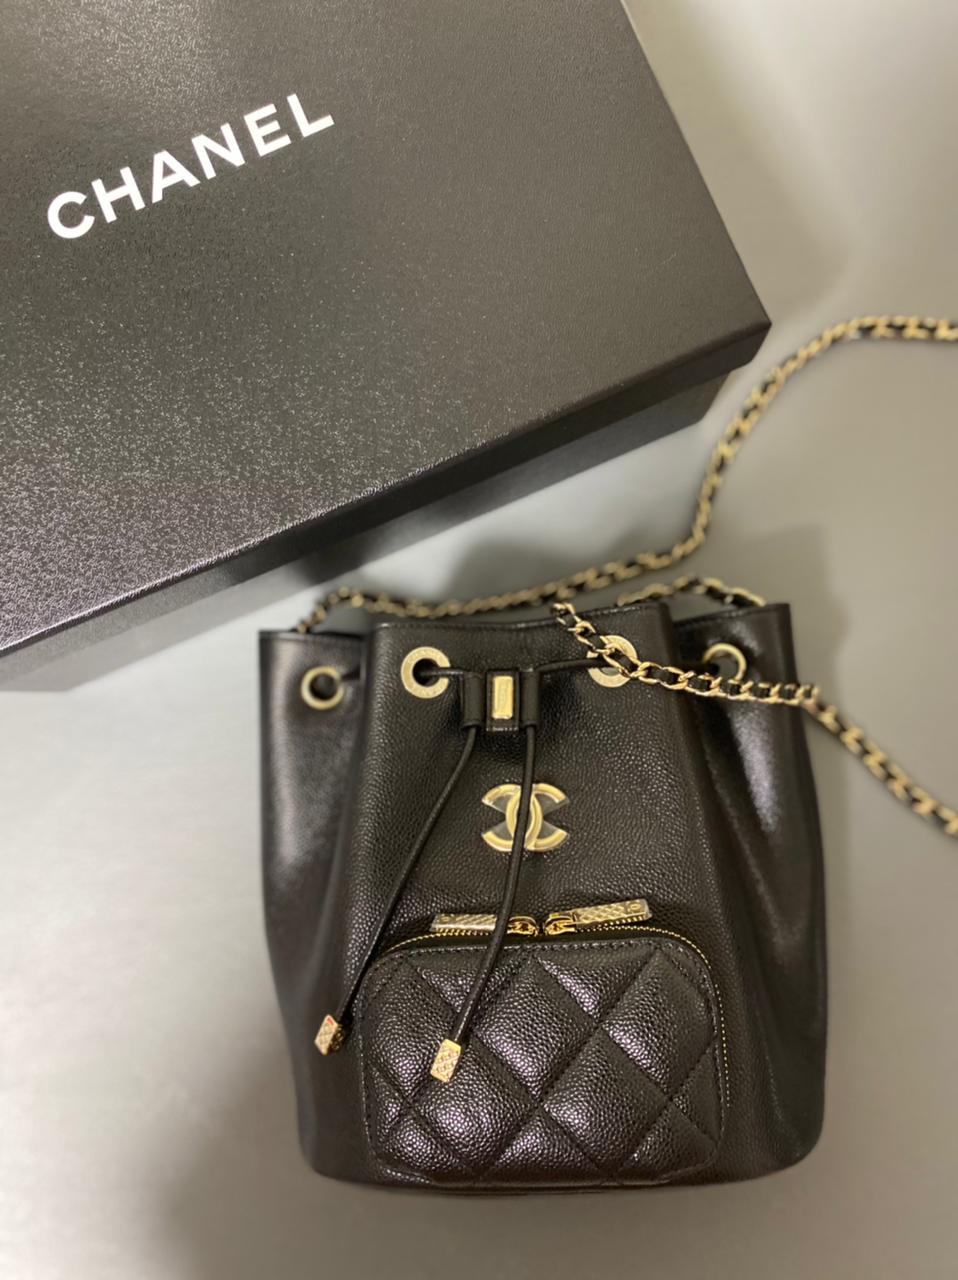 Chanel Business Affinity Bucket Bag – I L U X E